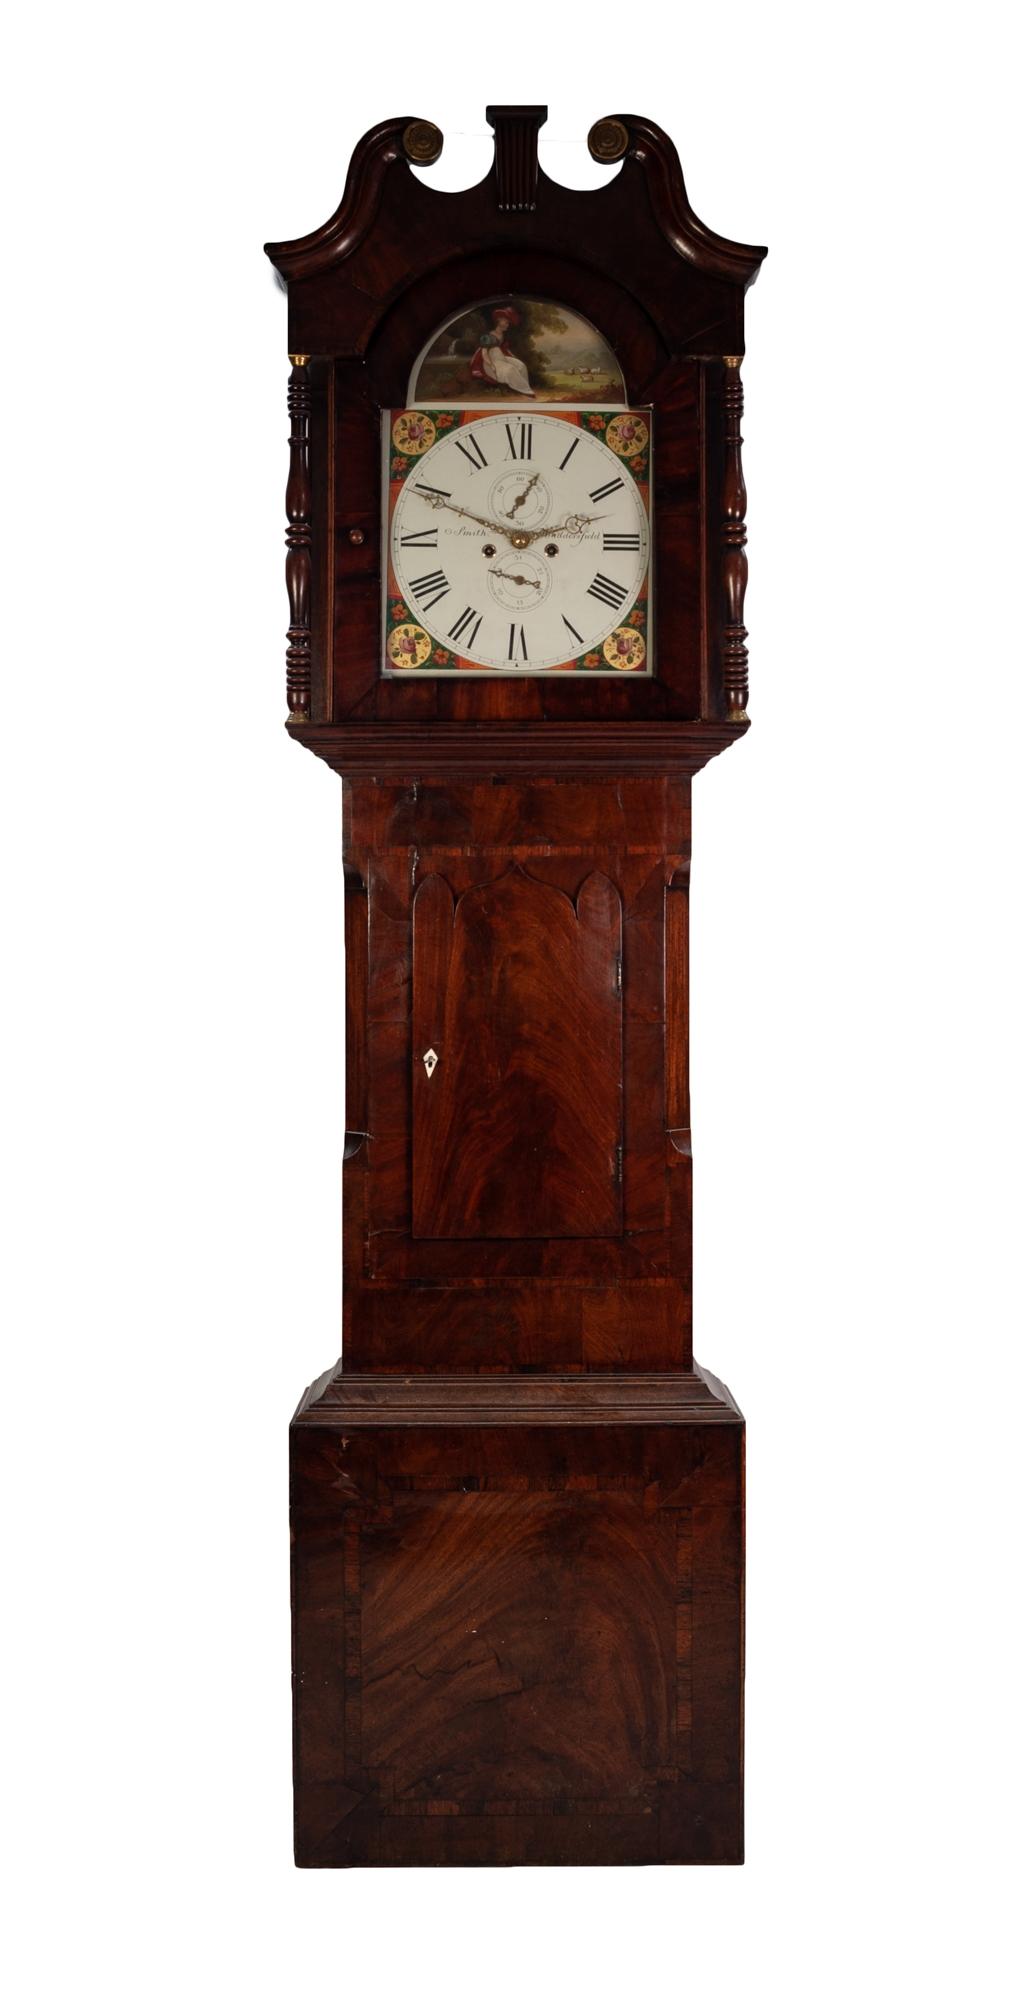 G.SMITH, HUDDERSFIELD, EARLY NINETEENTH CENTURY FIGURED MAHOGANY LONGCASE CLOCK, the 14? painted